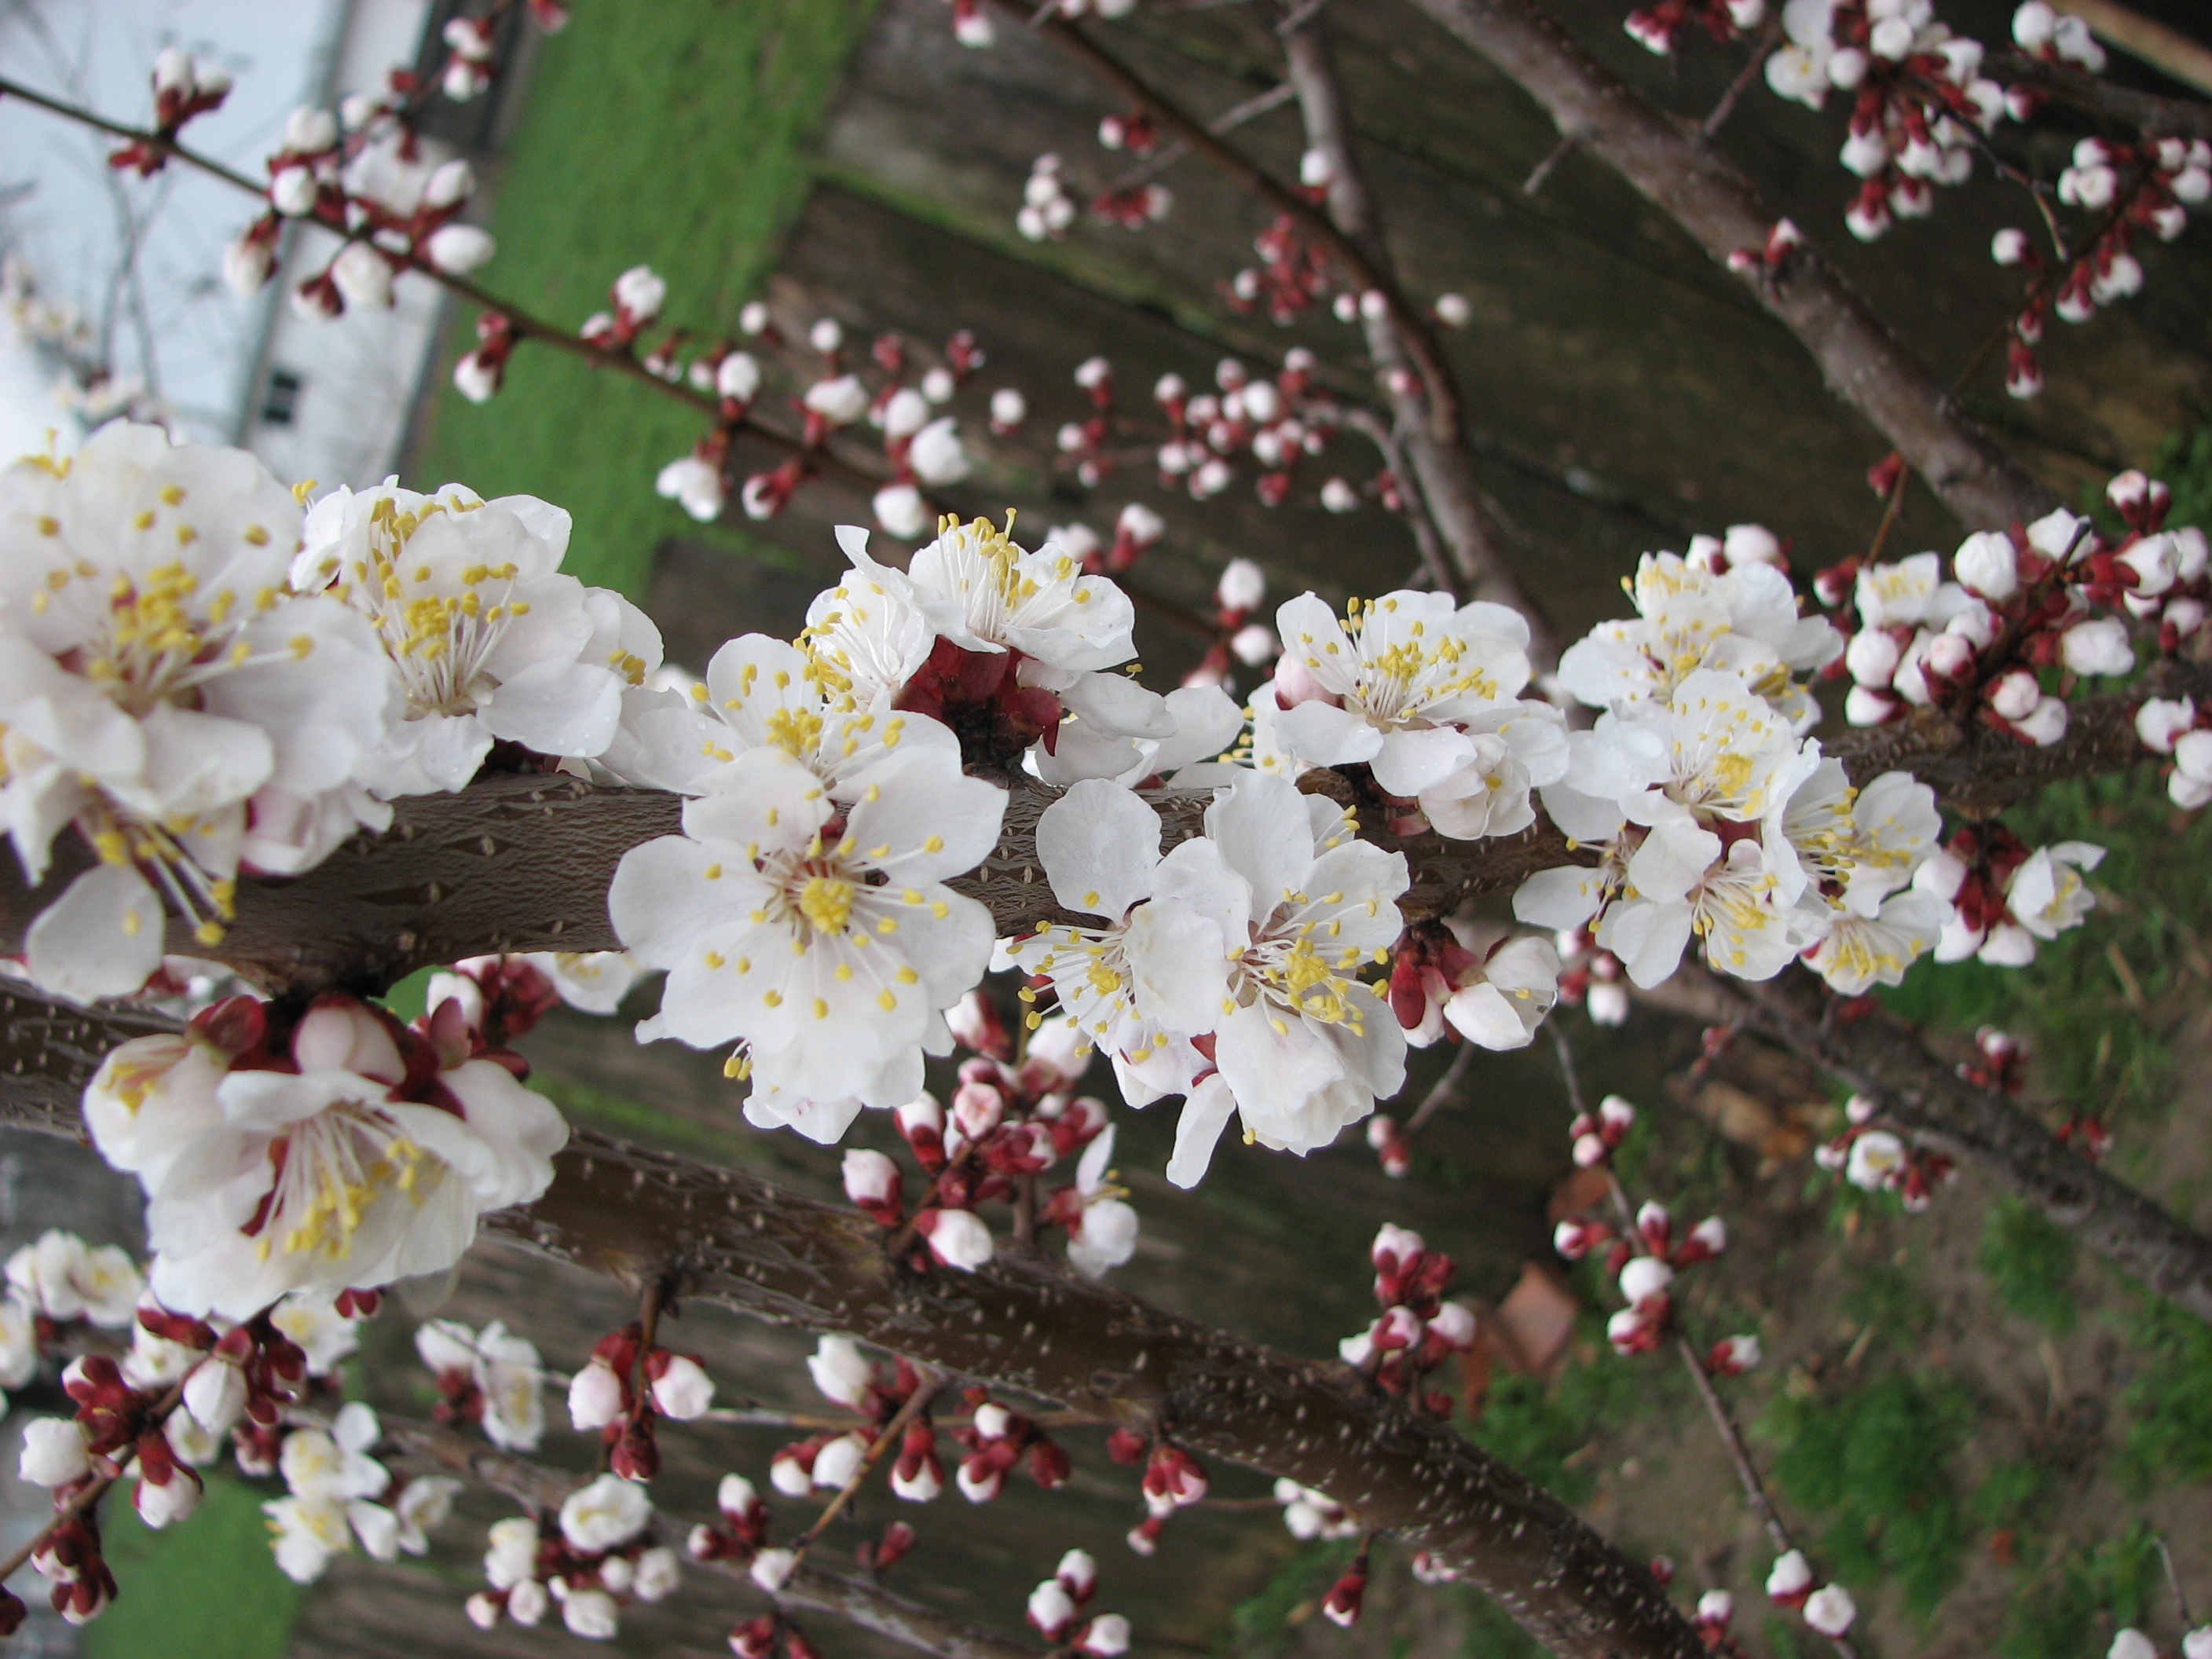 File:Cherry tree flowers (2396740612).jpg - Wikimedia Commons